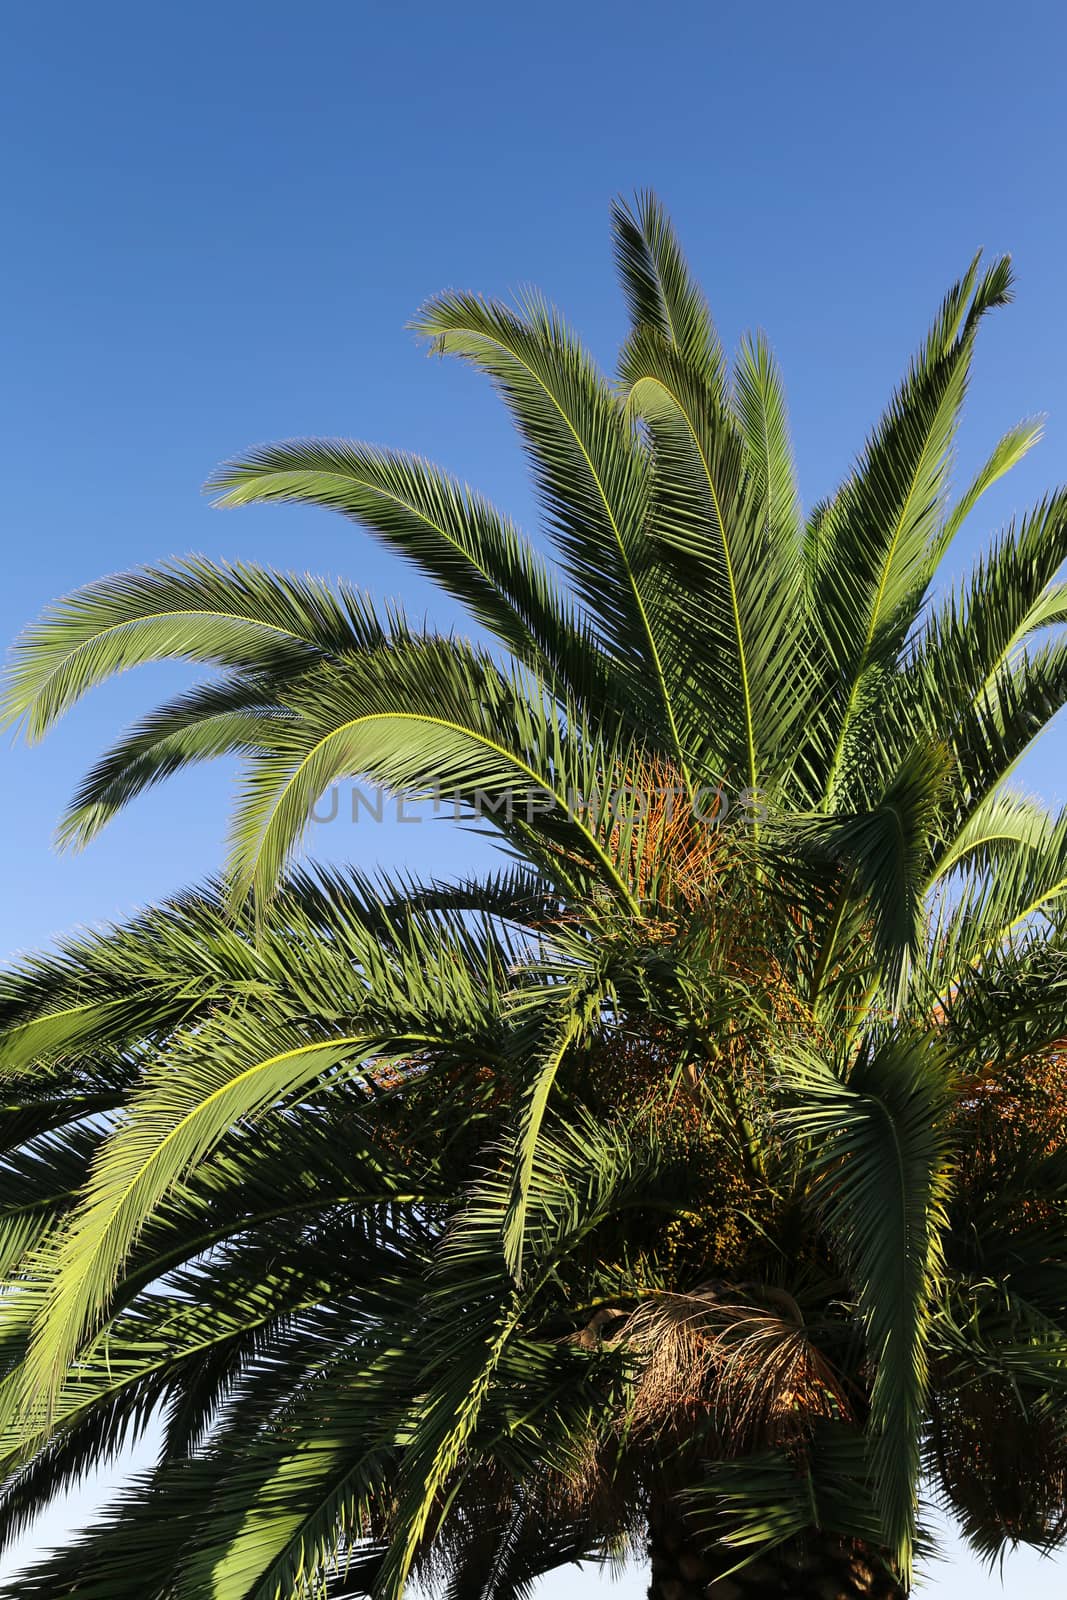 Close Up of a Palm tree with a blue sky